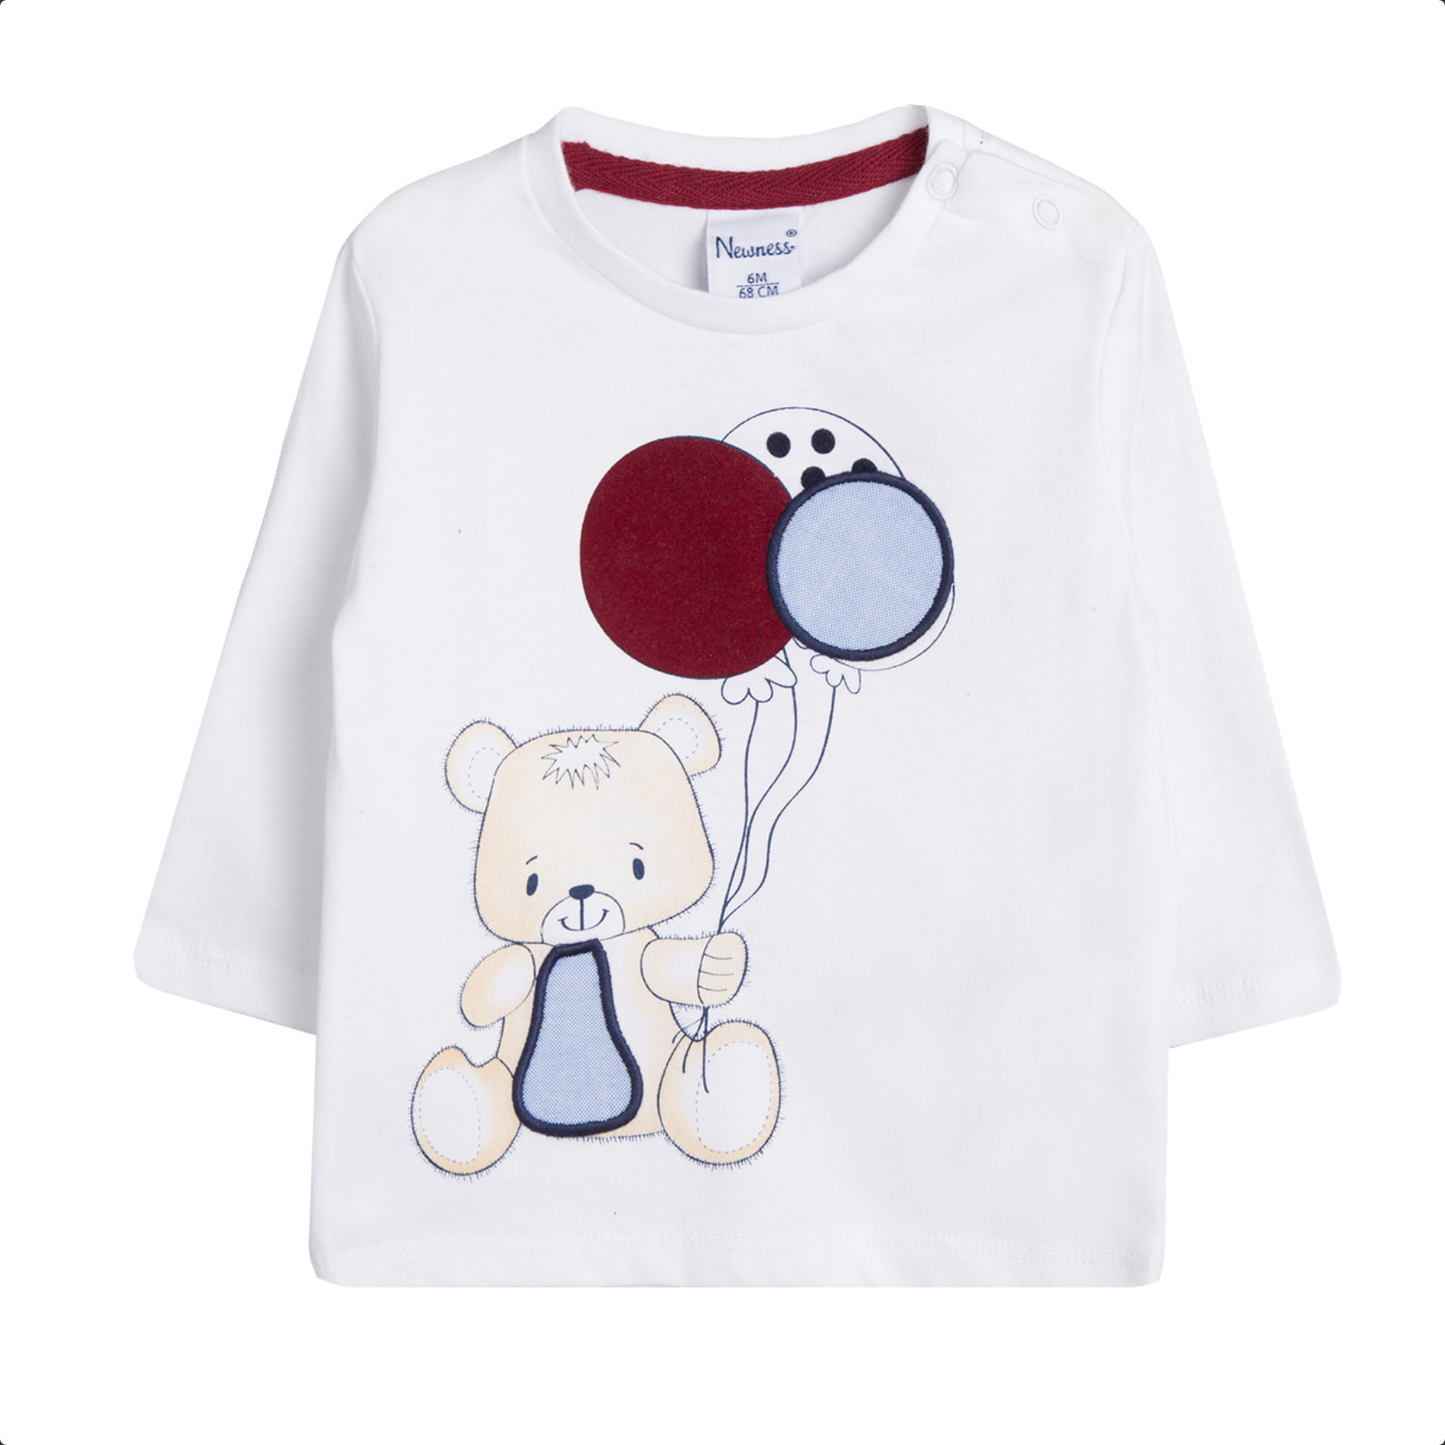 Bear Bear Balloon Long Sleeve White Top - 3 to 12 months - Stylemykid.com